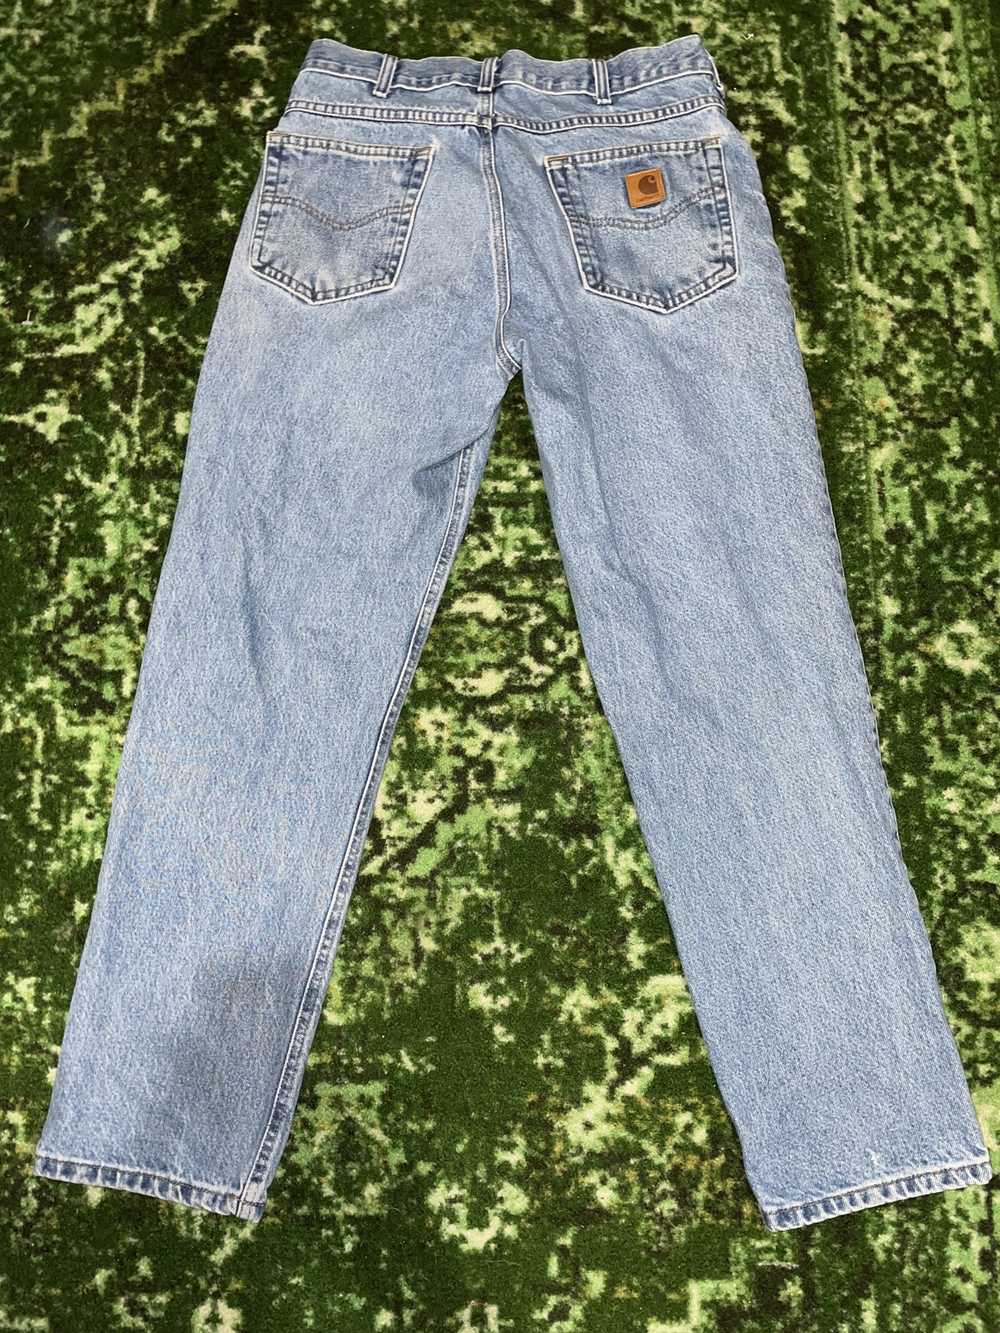 Carhartt Vintage Carhartt Light Wash Jeans - image 2